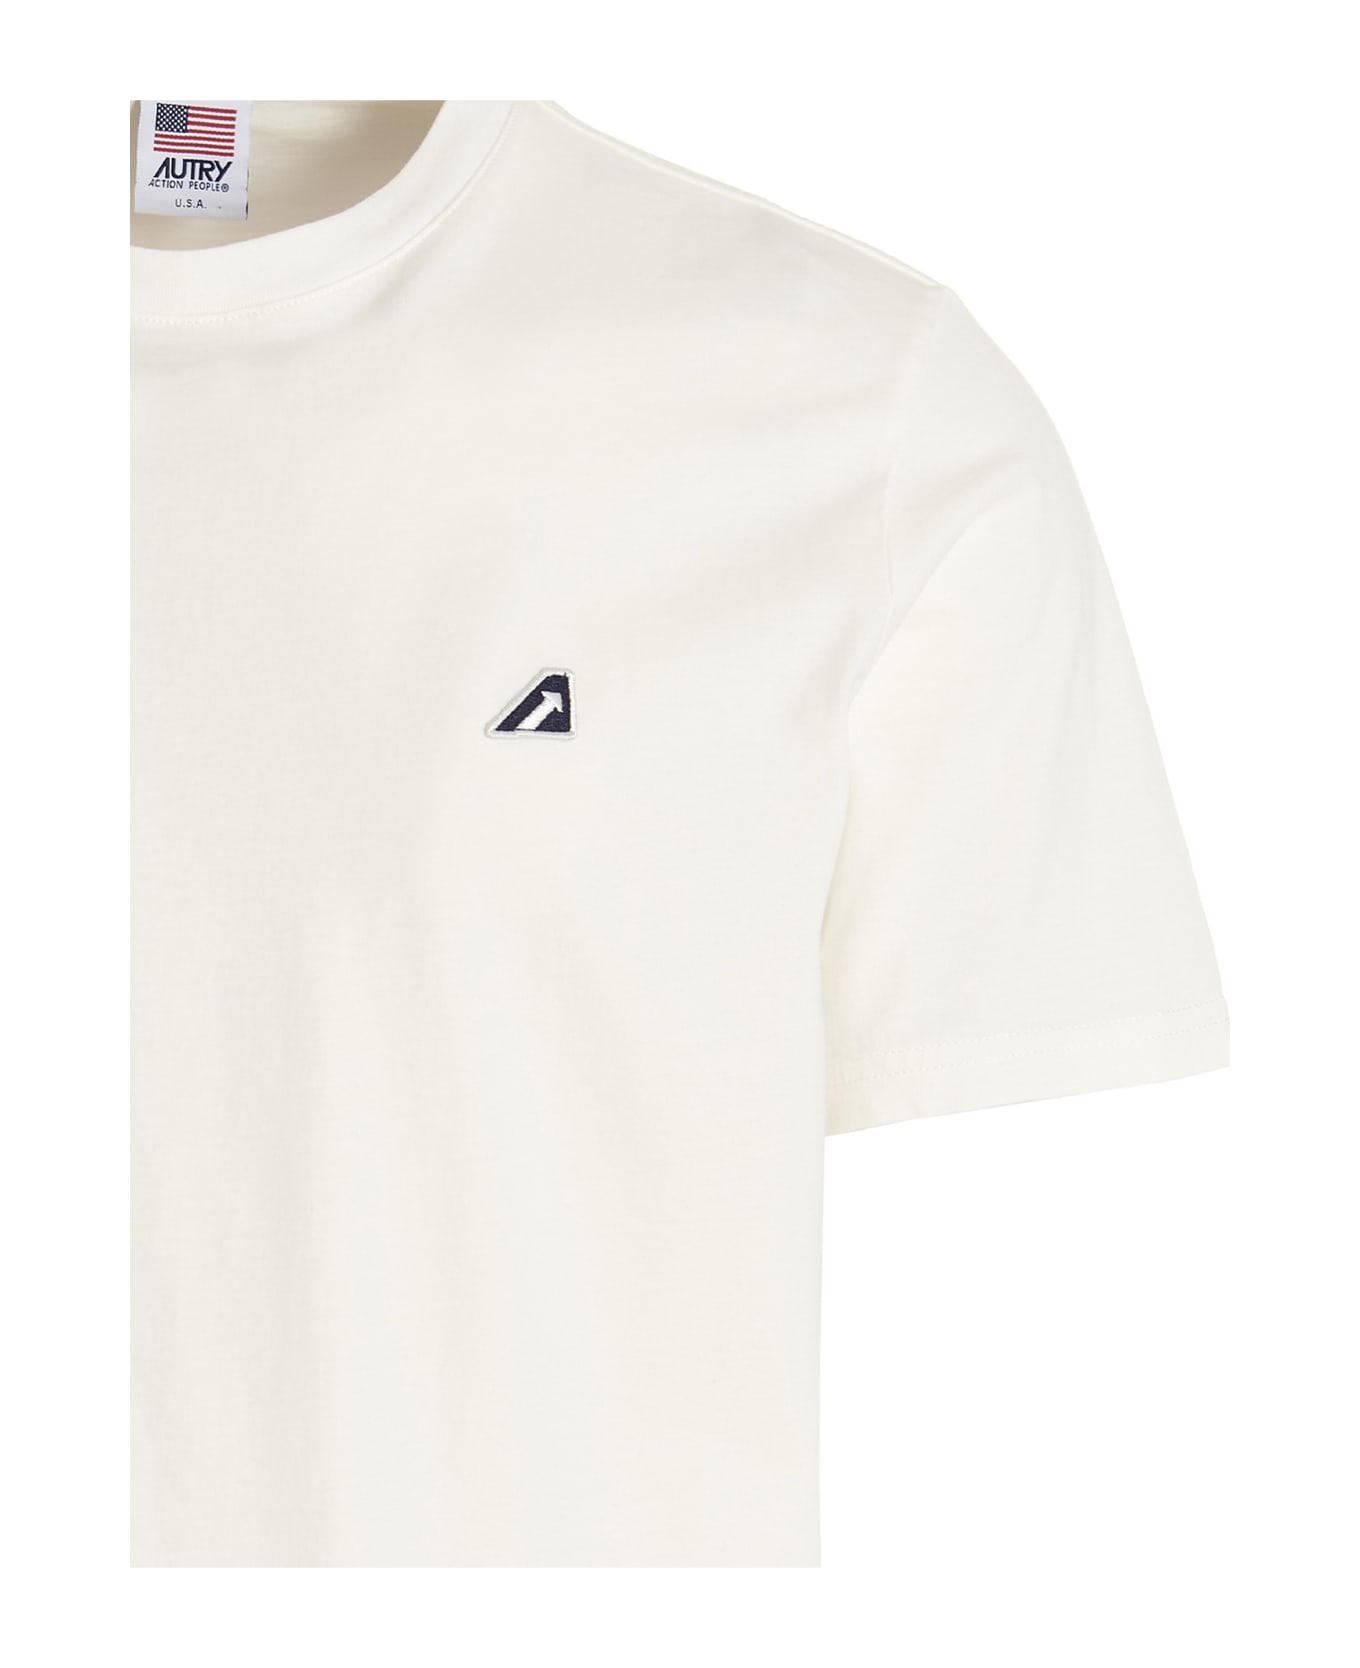 Autry T-shirt In White Cotton - WHITE Tシャツ